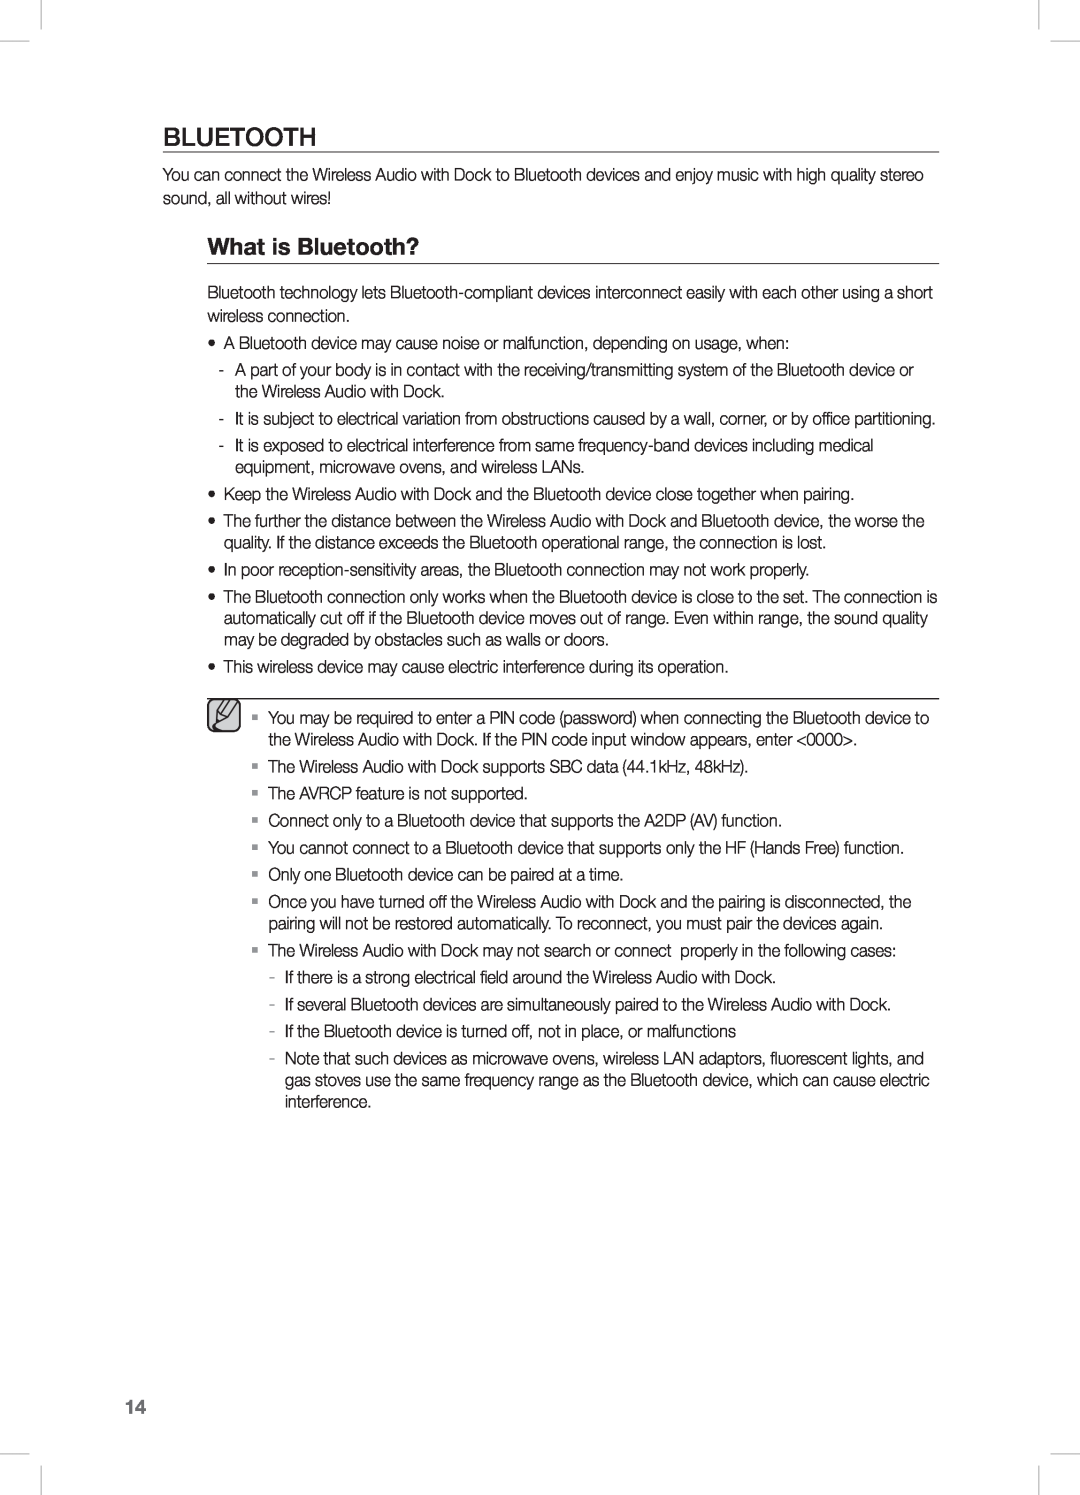 Samsung DA-E570 user manual What is Bluetooth? 